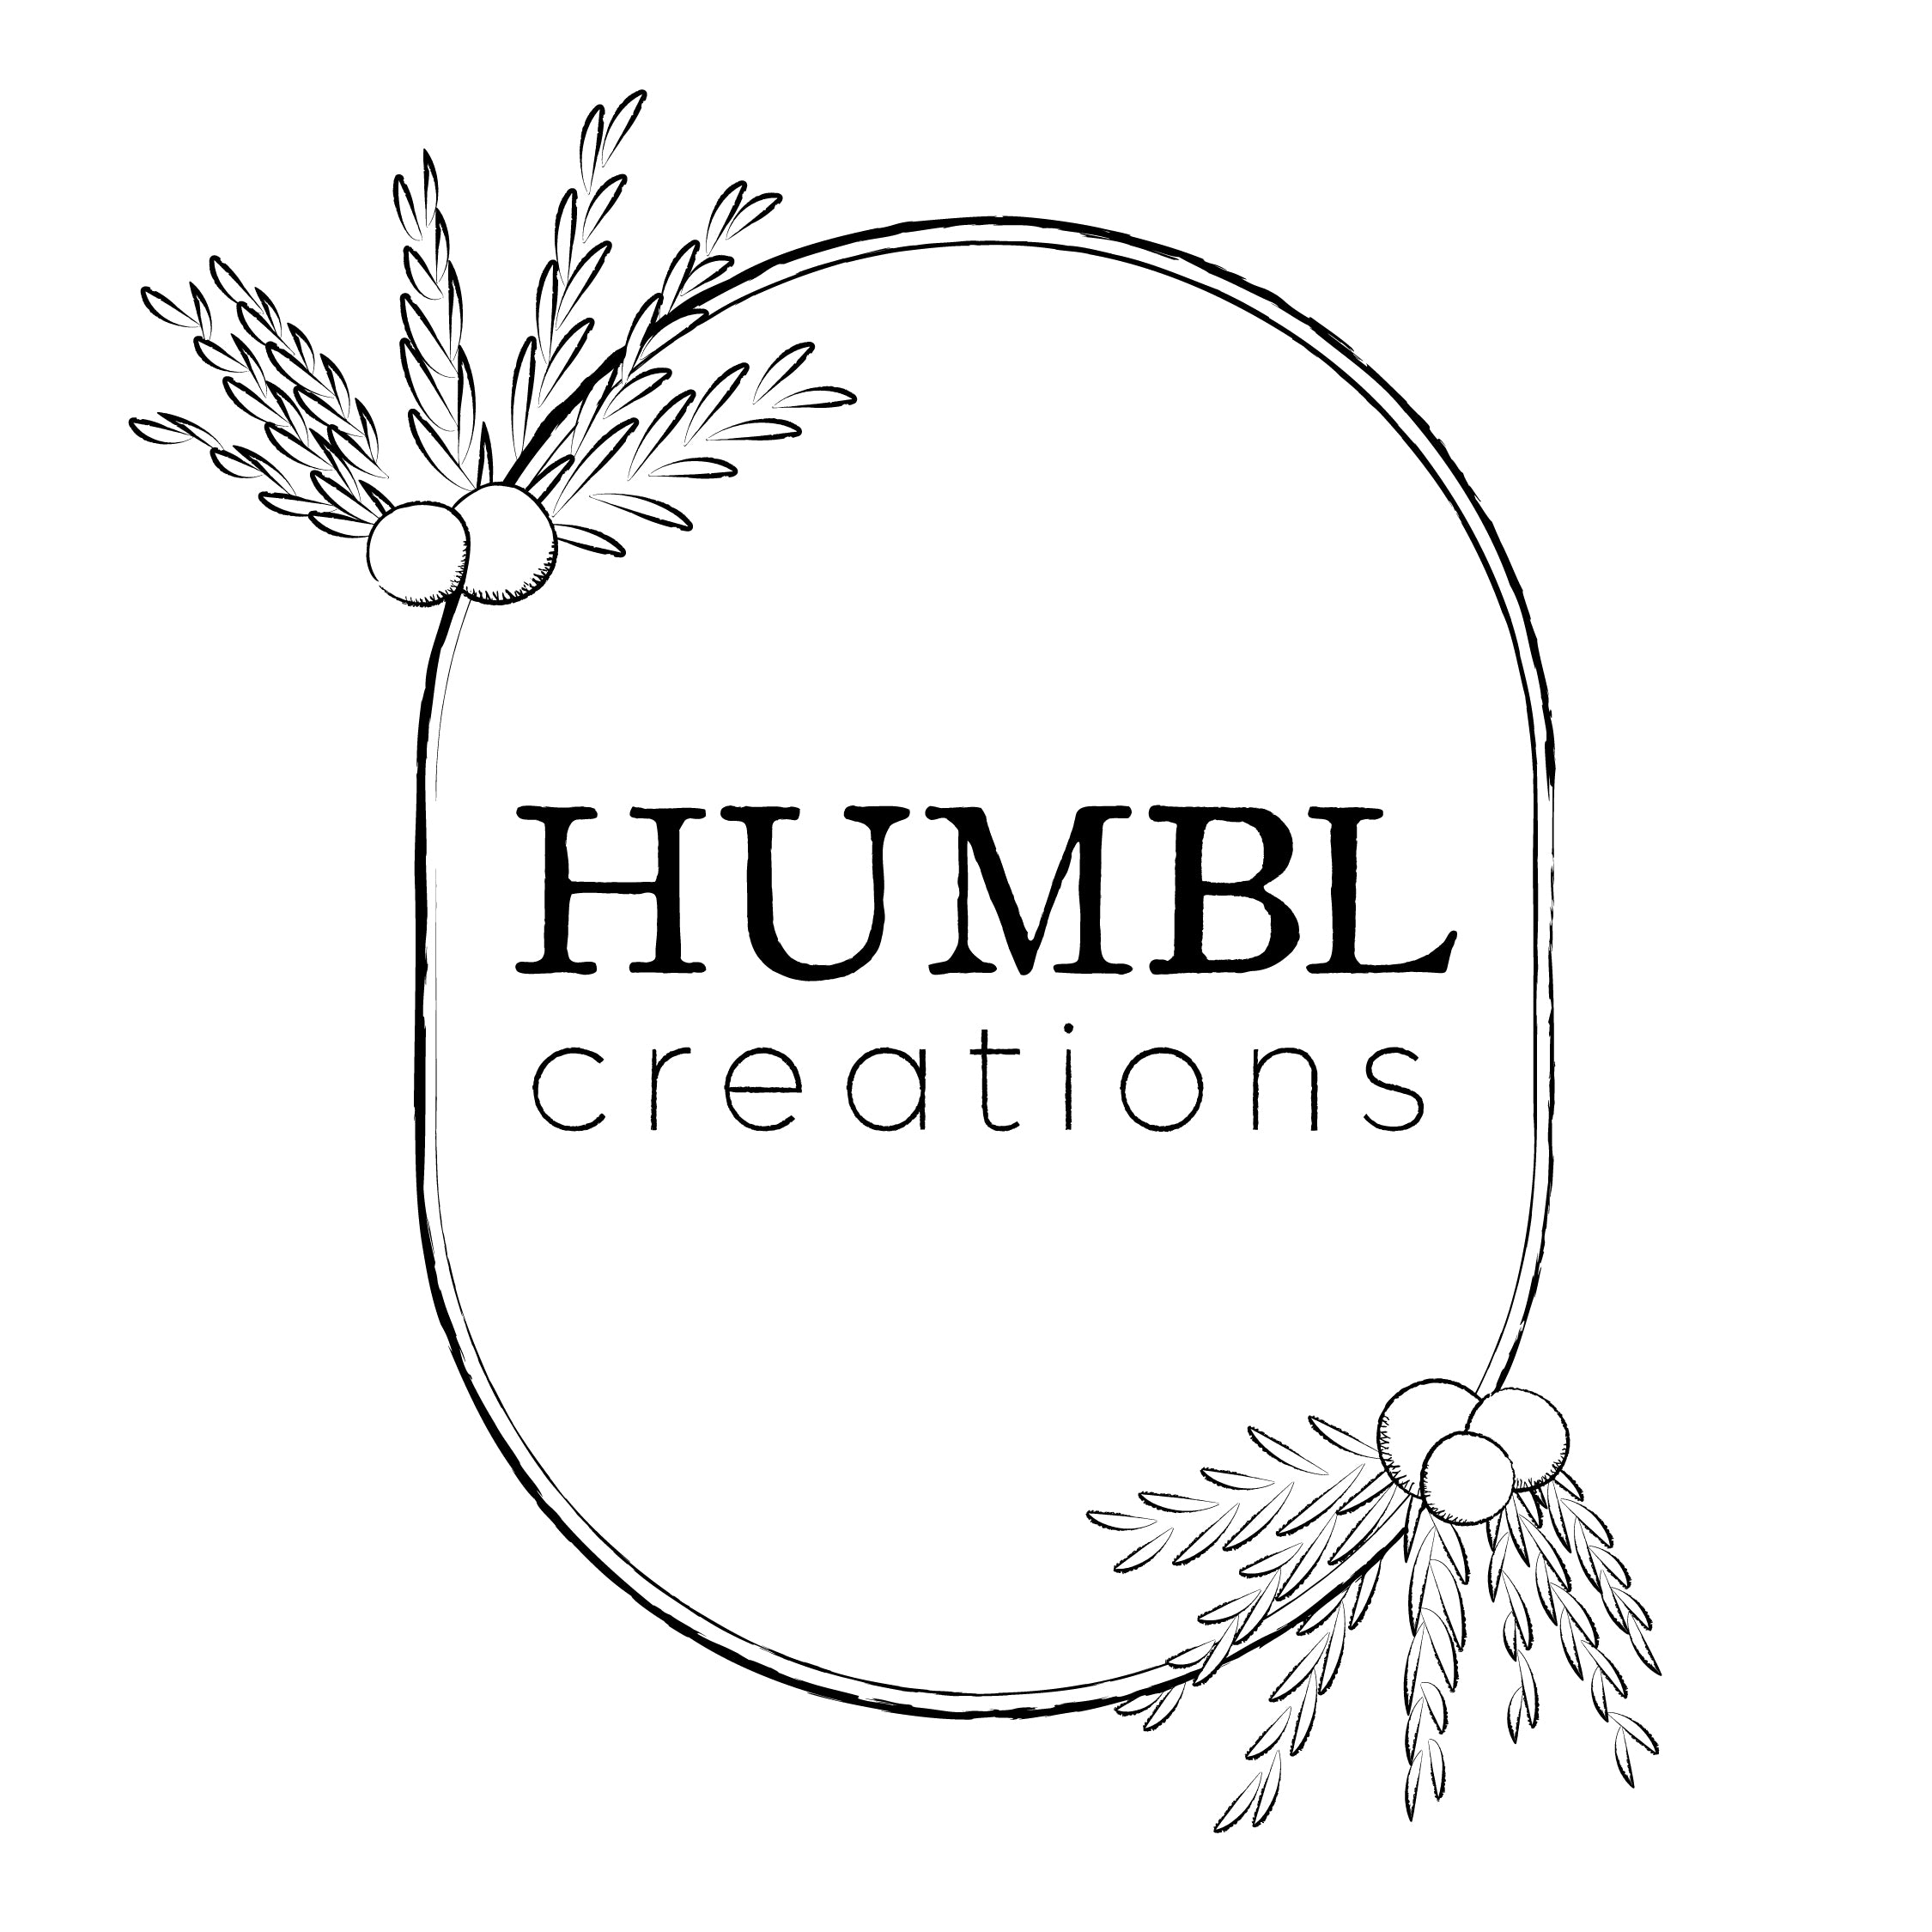 HUMBL Creations